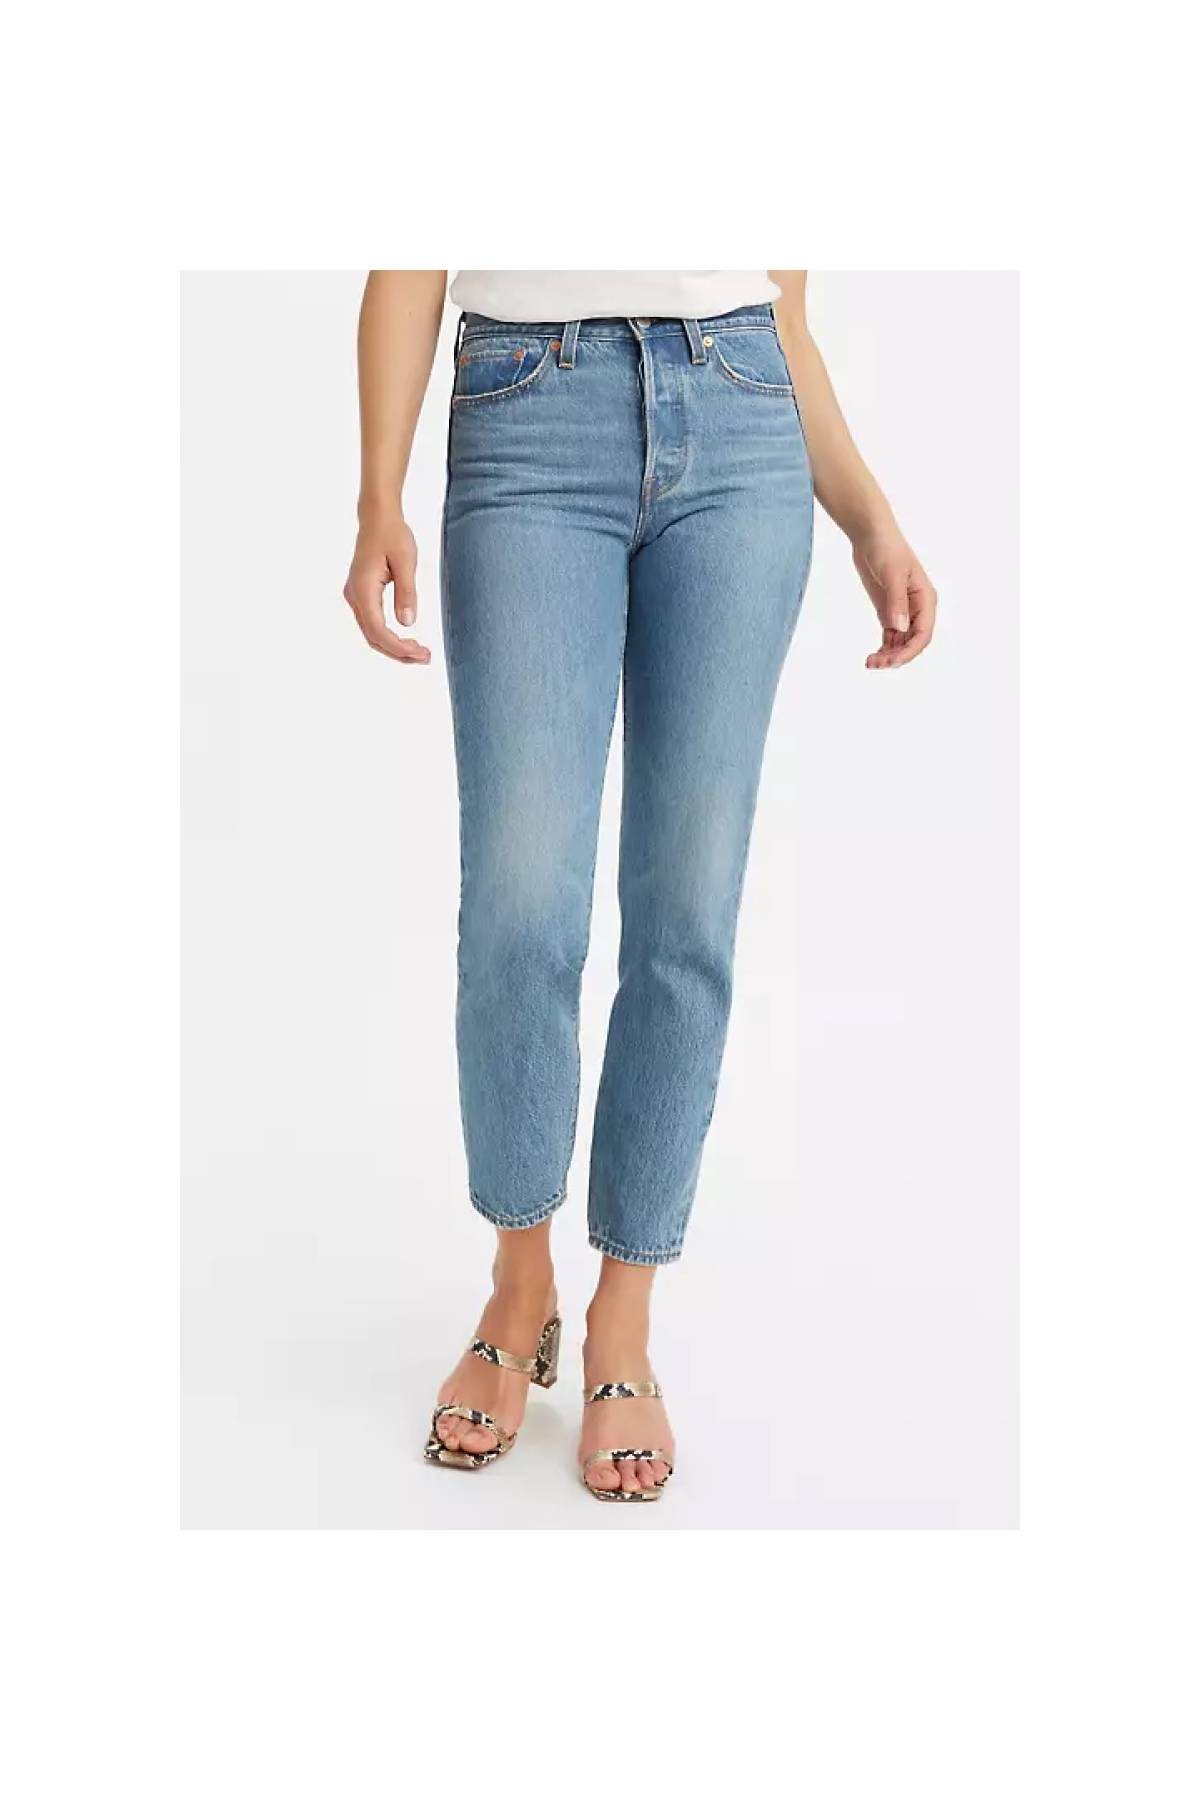 model weraing wedgie straight jeans